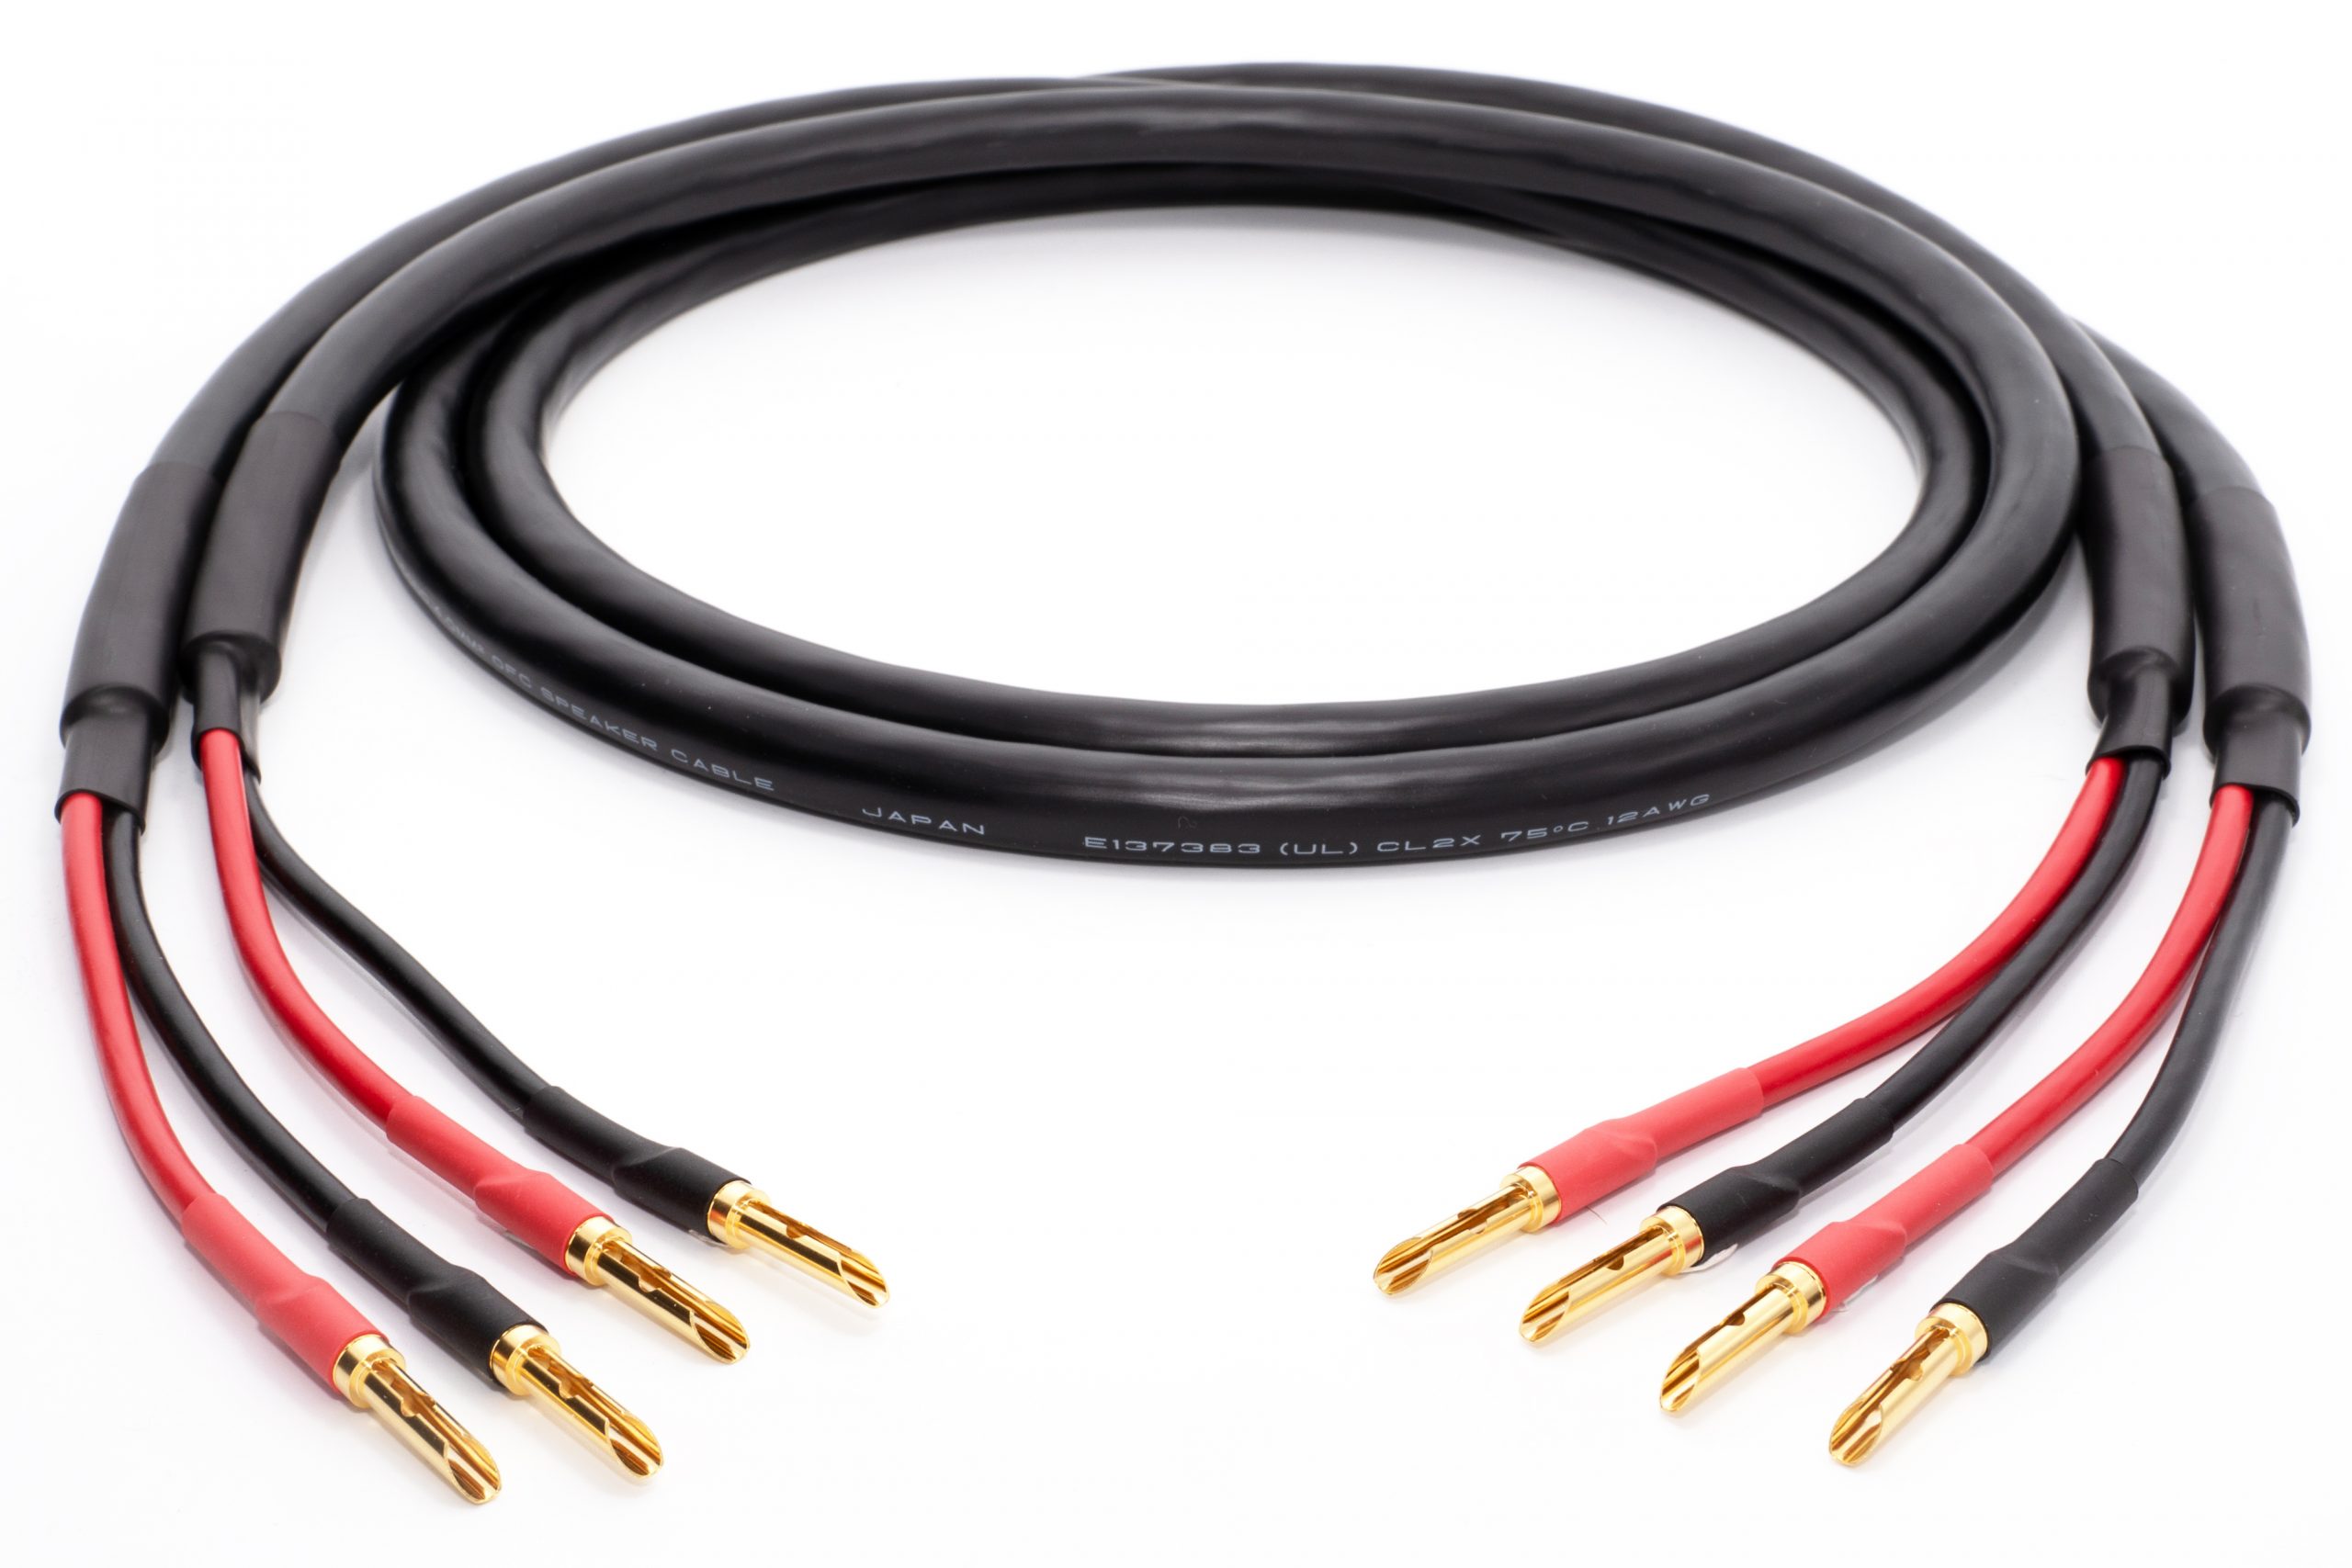 enoaudio Mogami 3103 (L,R) pair of speaker cables | VIABLUE T6S banana plugs